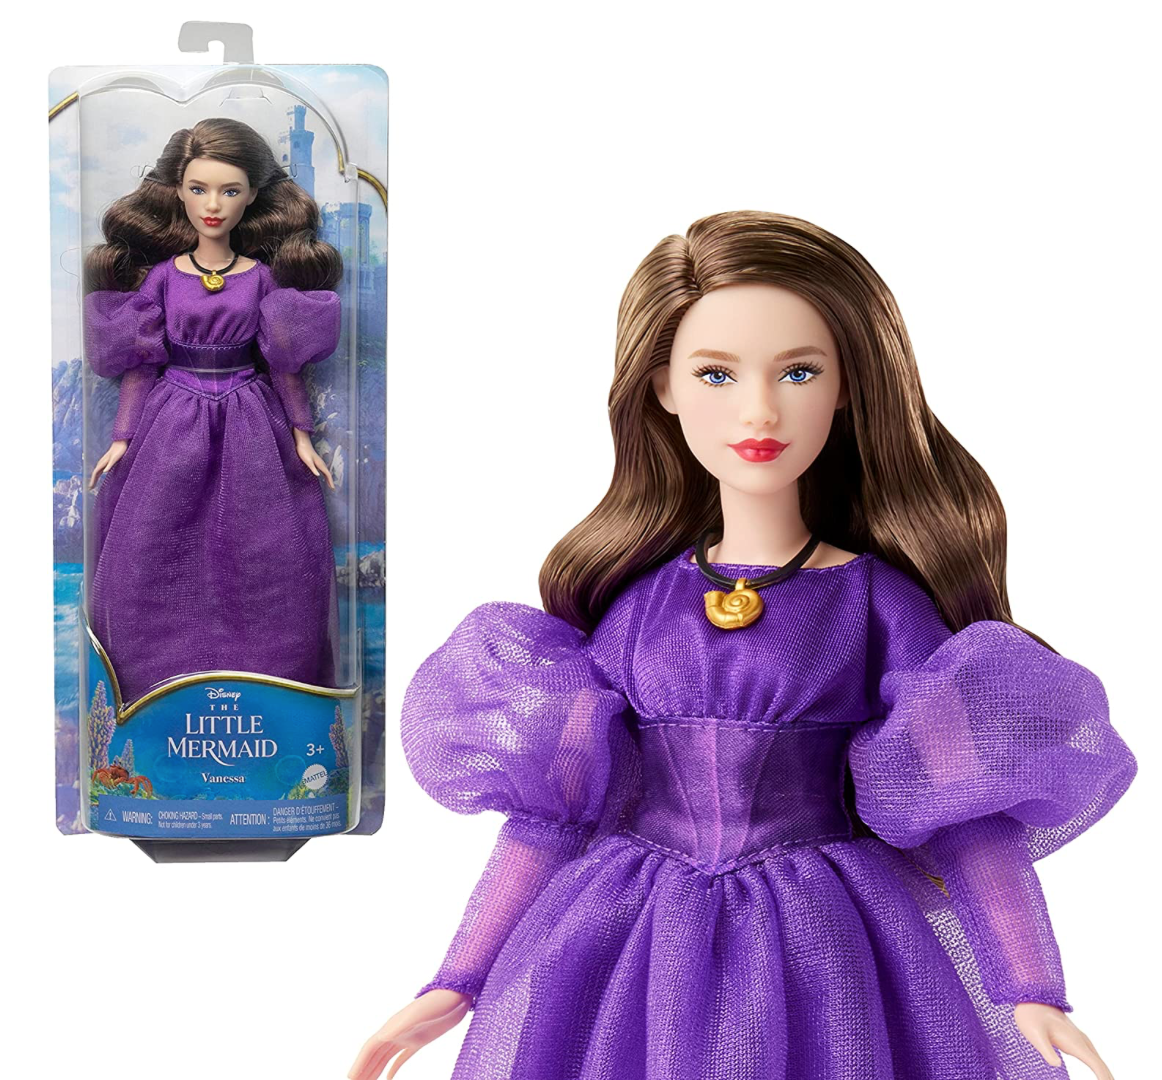 Disney Little Mermaid Vanessa Fashion Doll Signature Purple Dress New with Box